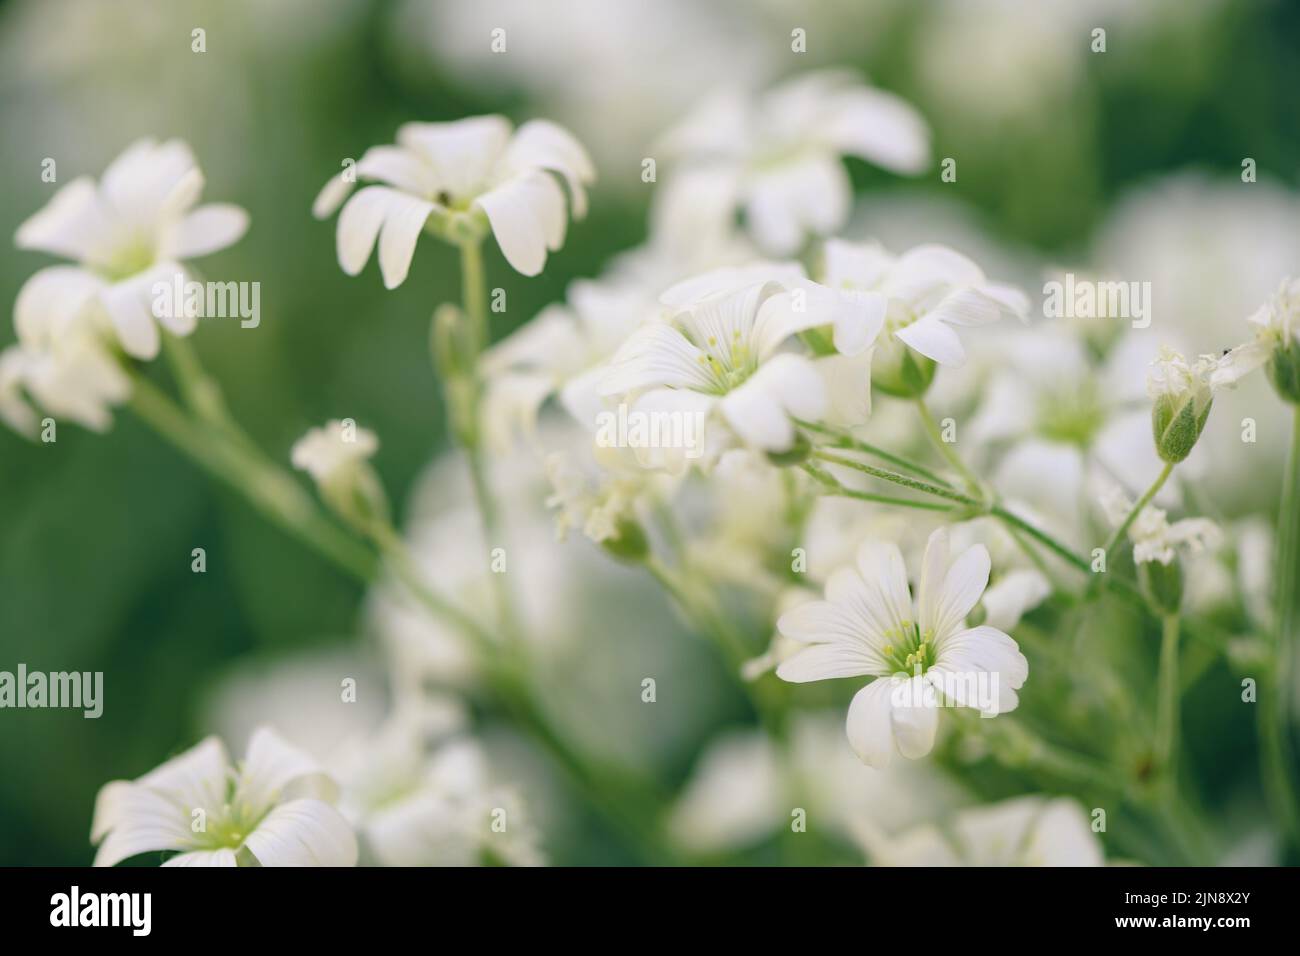 Cerastium tomentosum (snow-in-summer), herbaceous flowering plant, selective focus Stock Photo